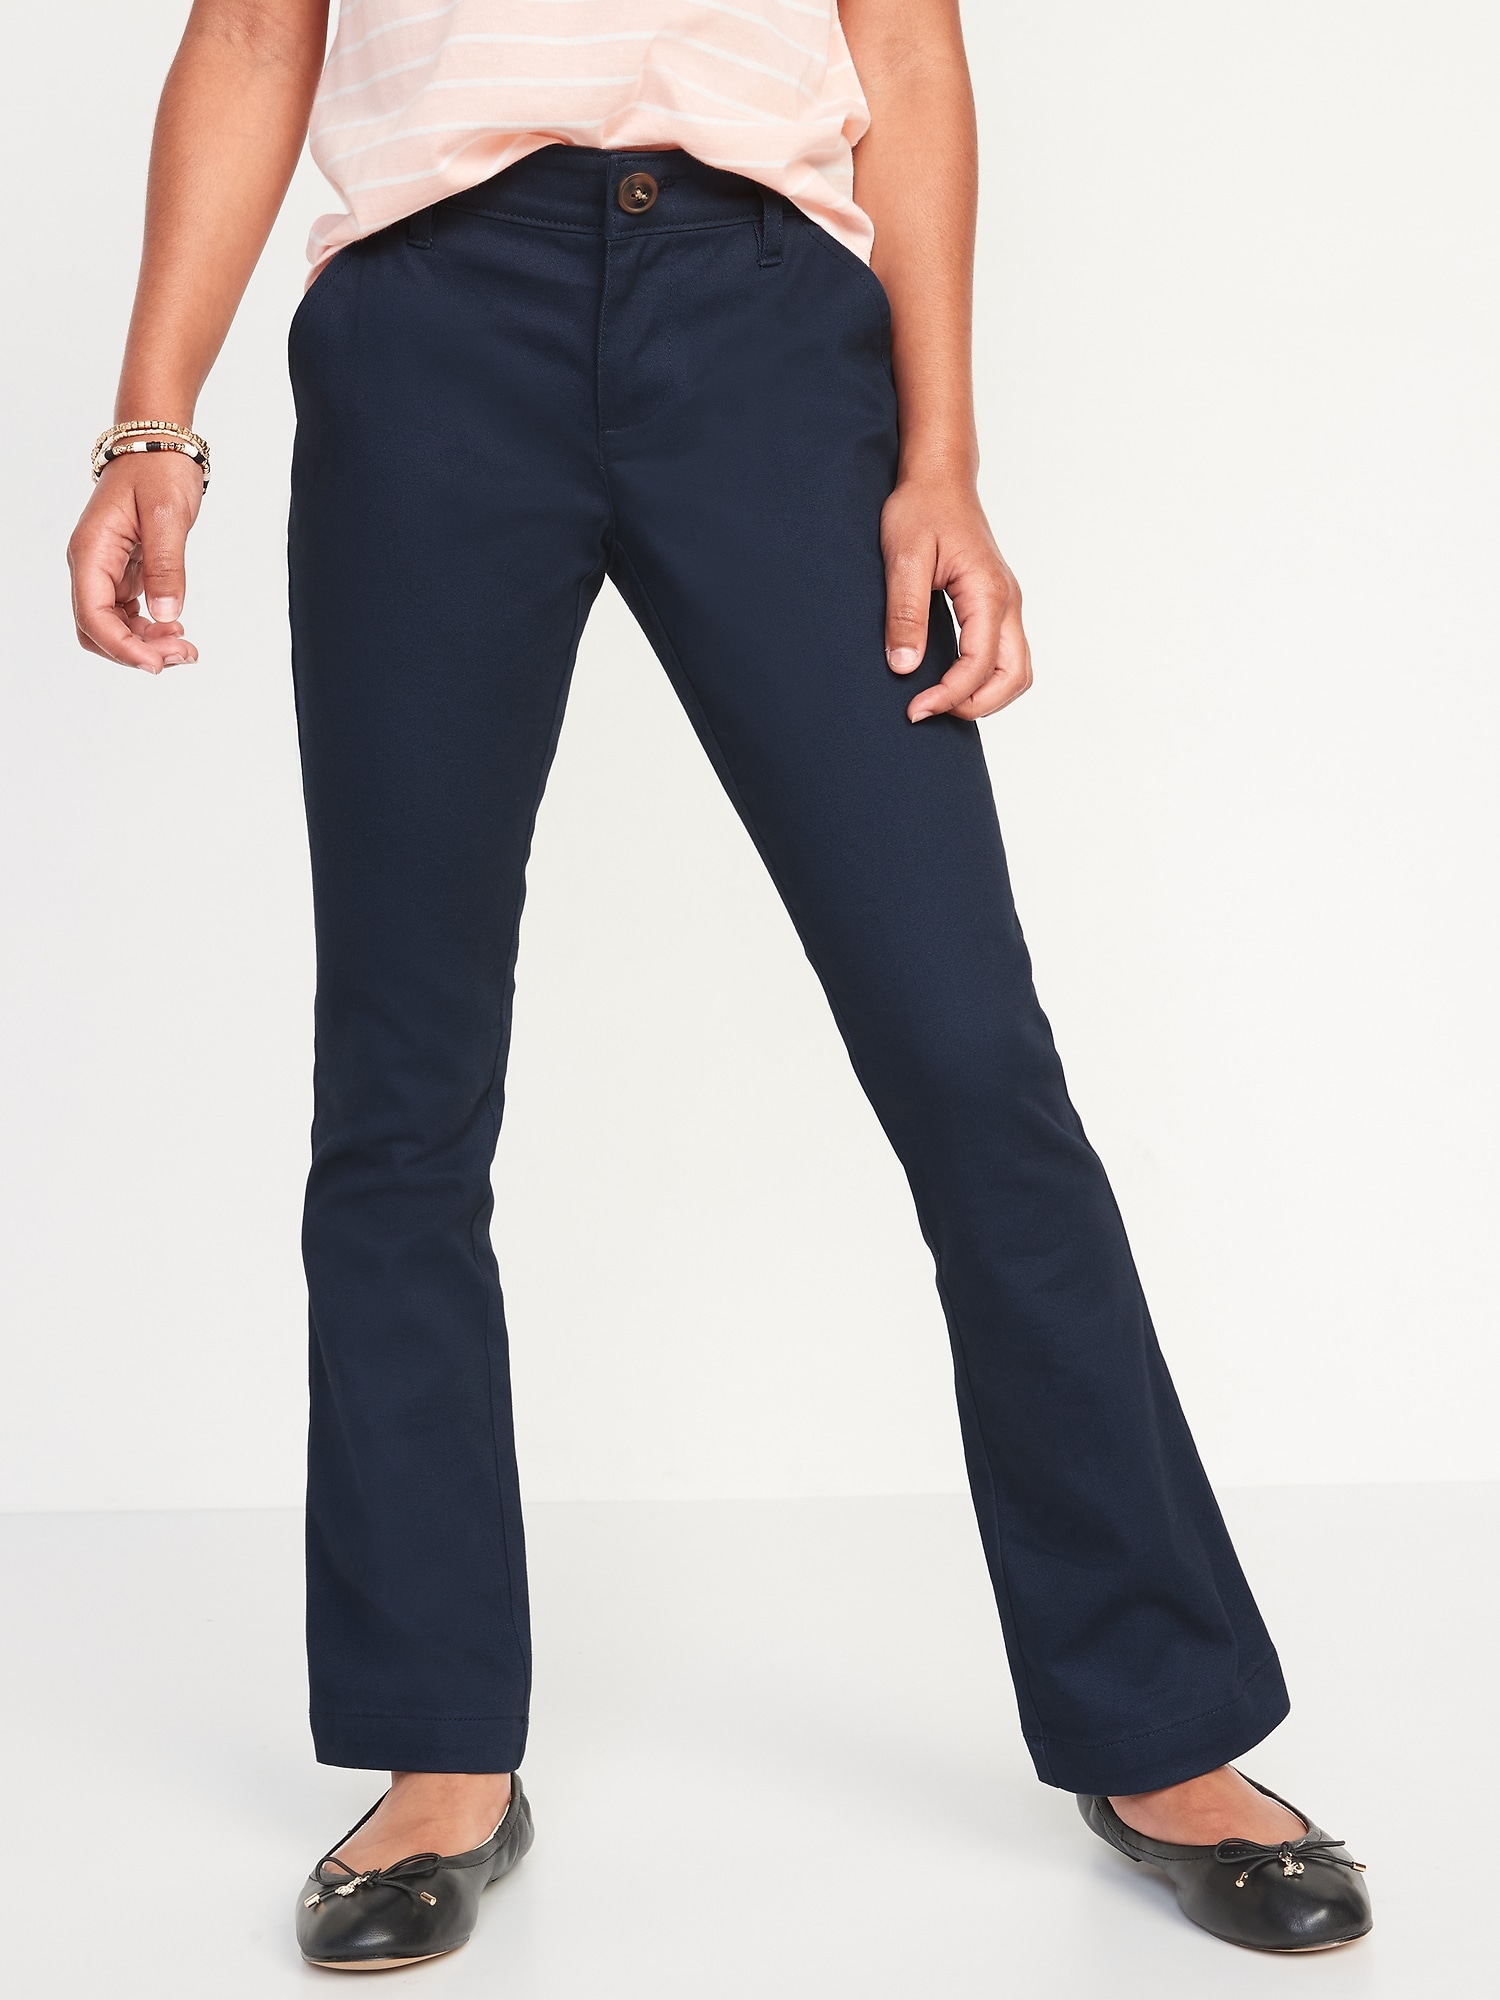 Beverly Hills Polo Club Girls' School Uniform Pants - 2 Pack Stretch Skinny  Fit Khaki Pants (4-16) - Walmart.com